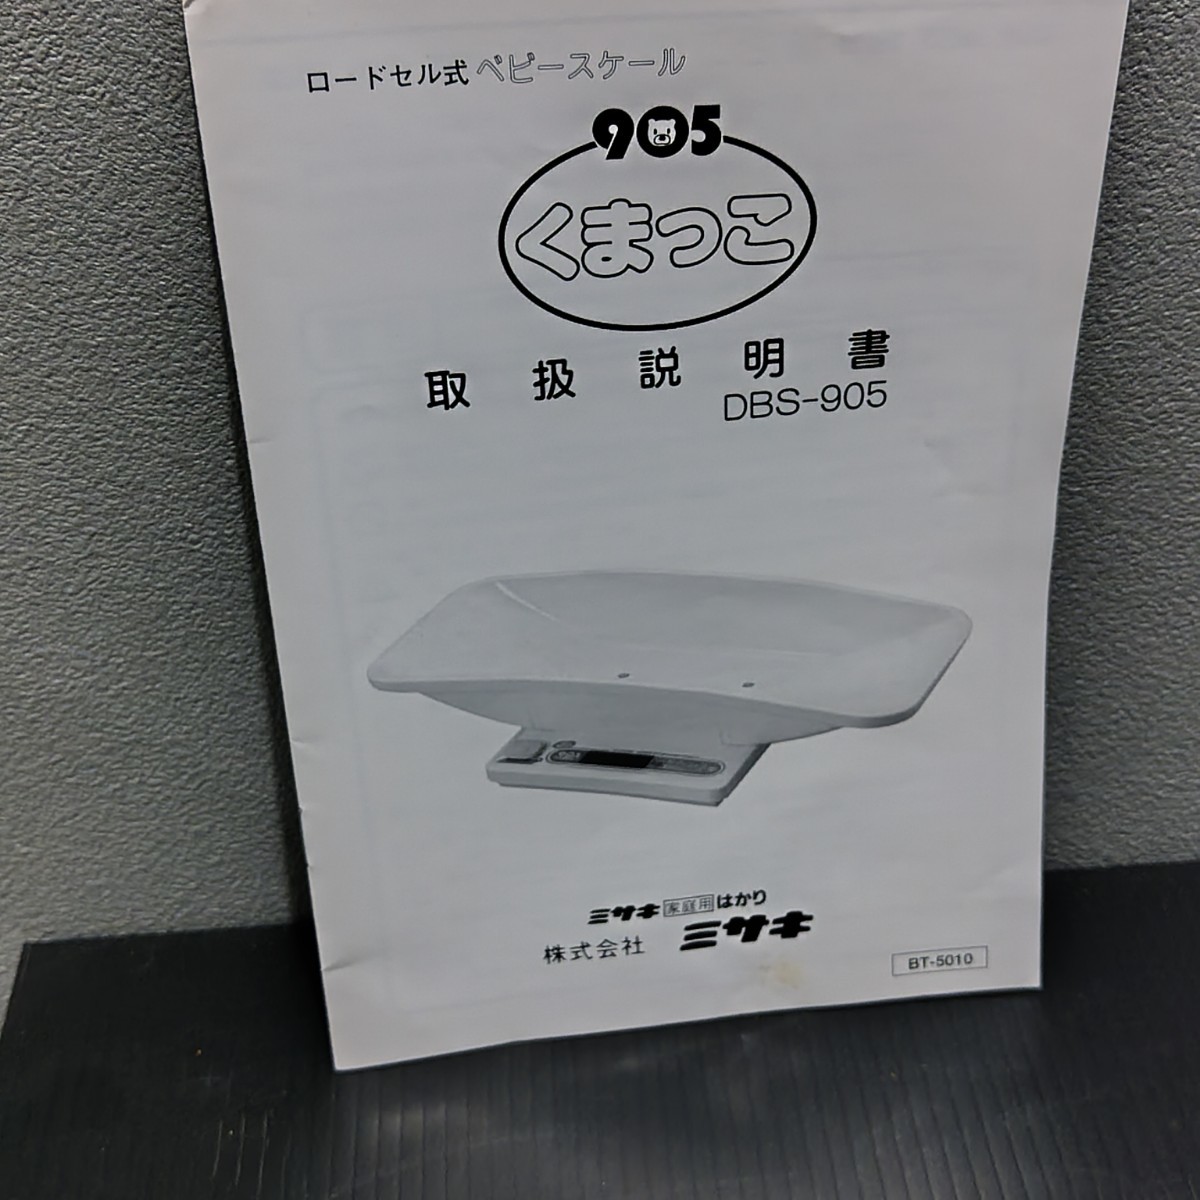 D(1213i6) that time thing MISAKImisaki digital baby scale ....0~20kg child baby pet scales retro electrification verification OK